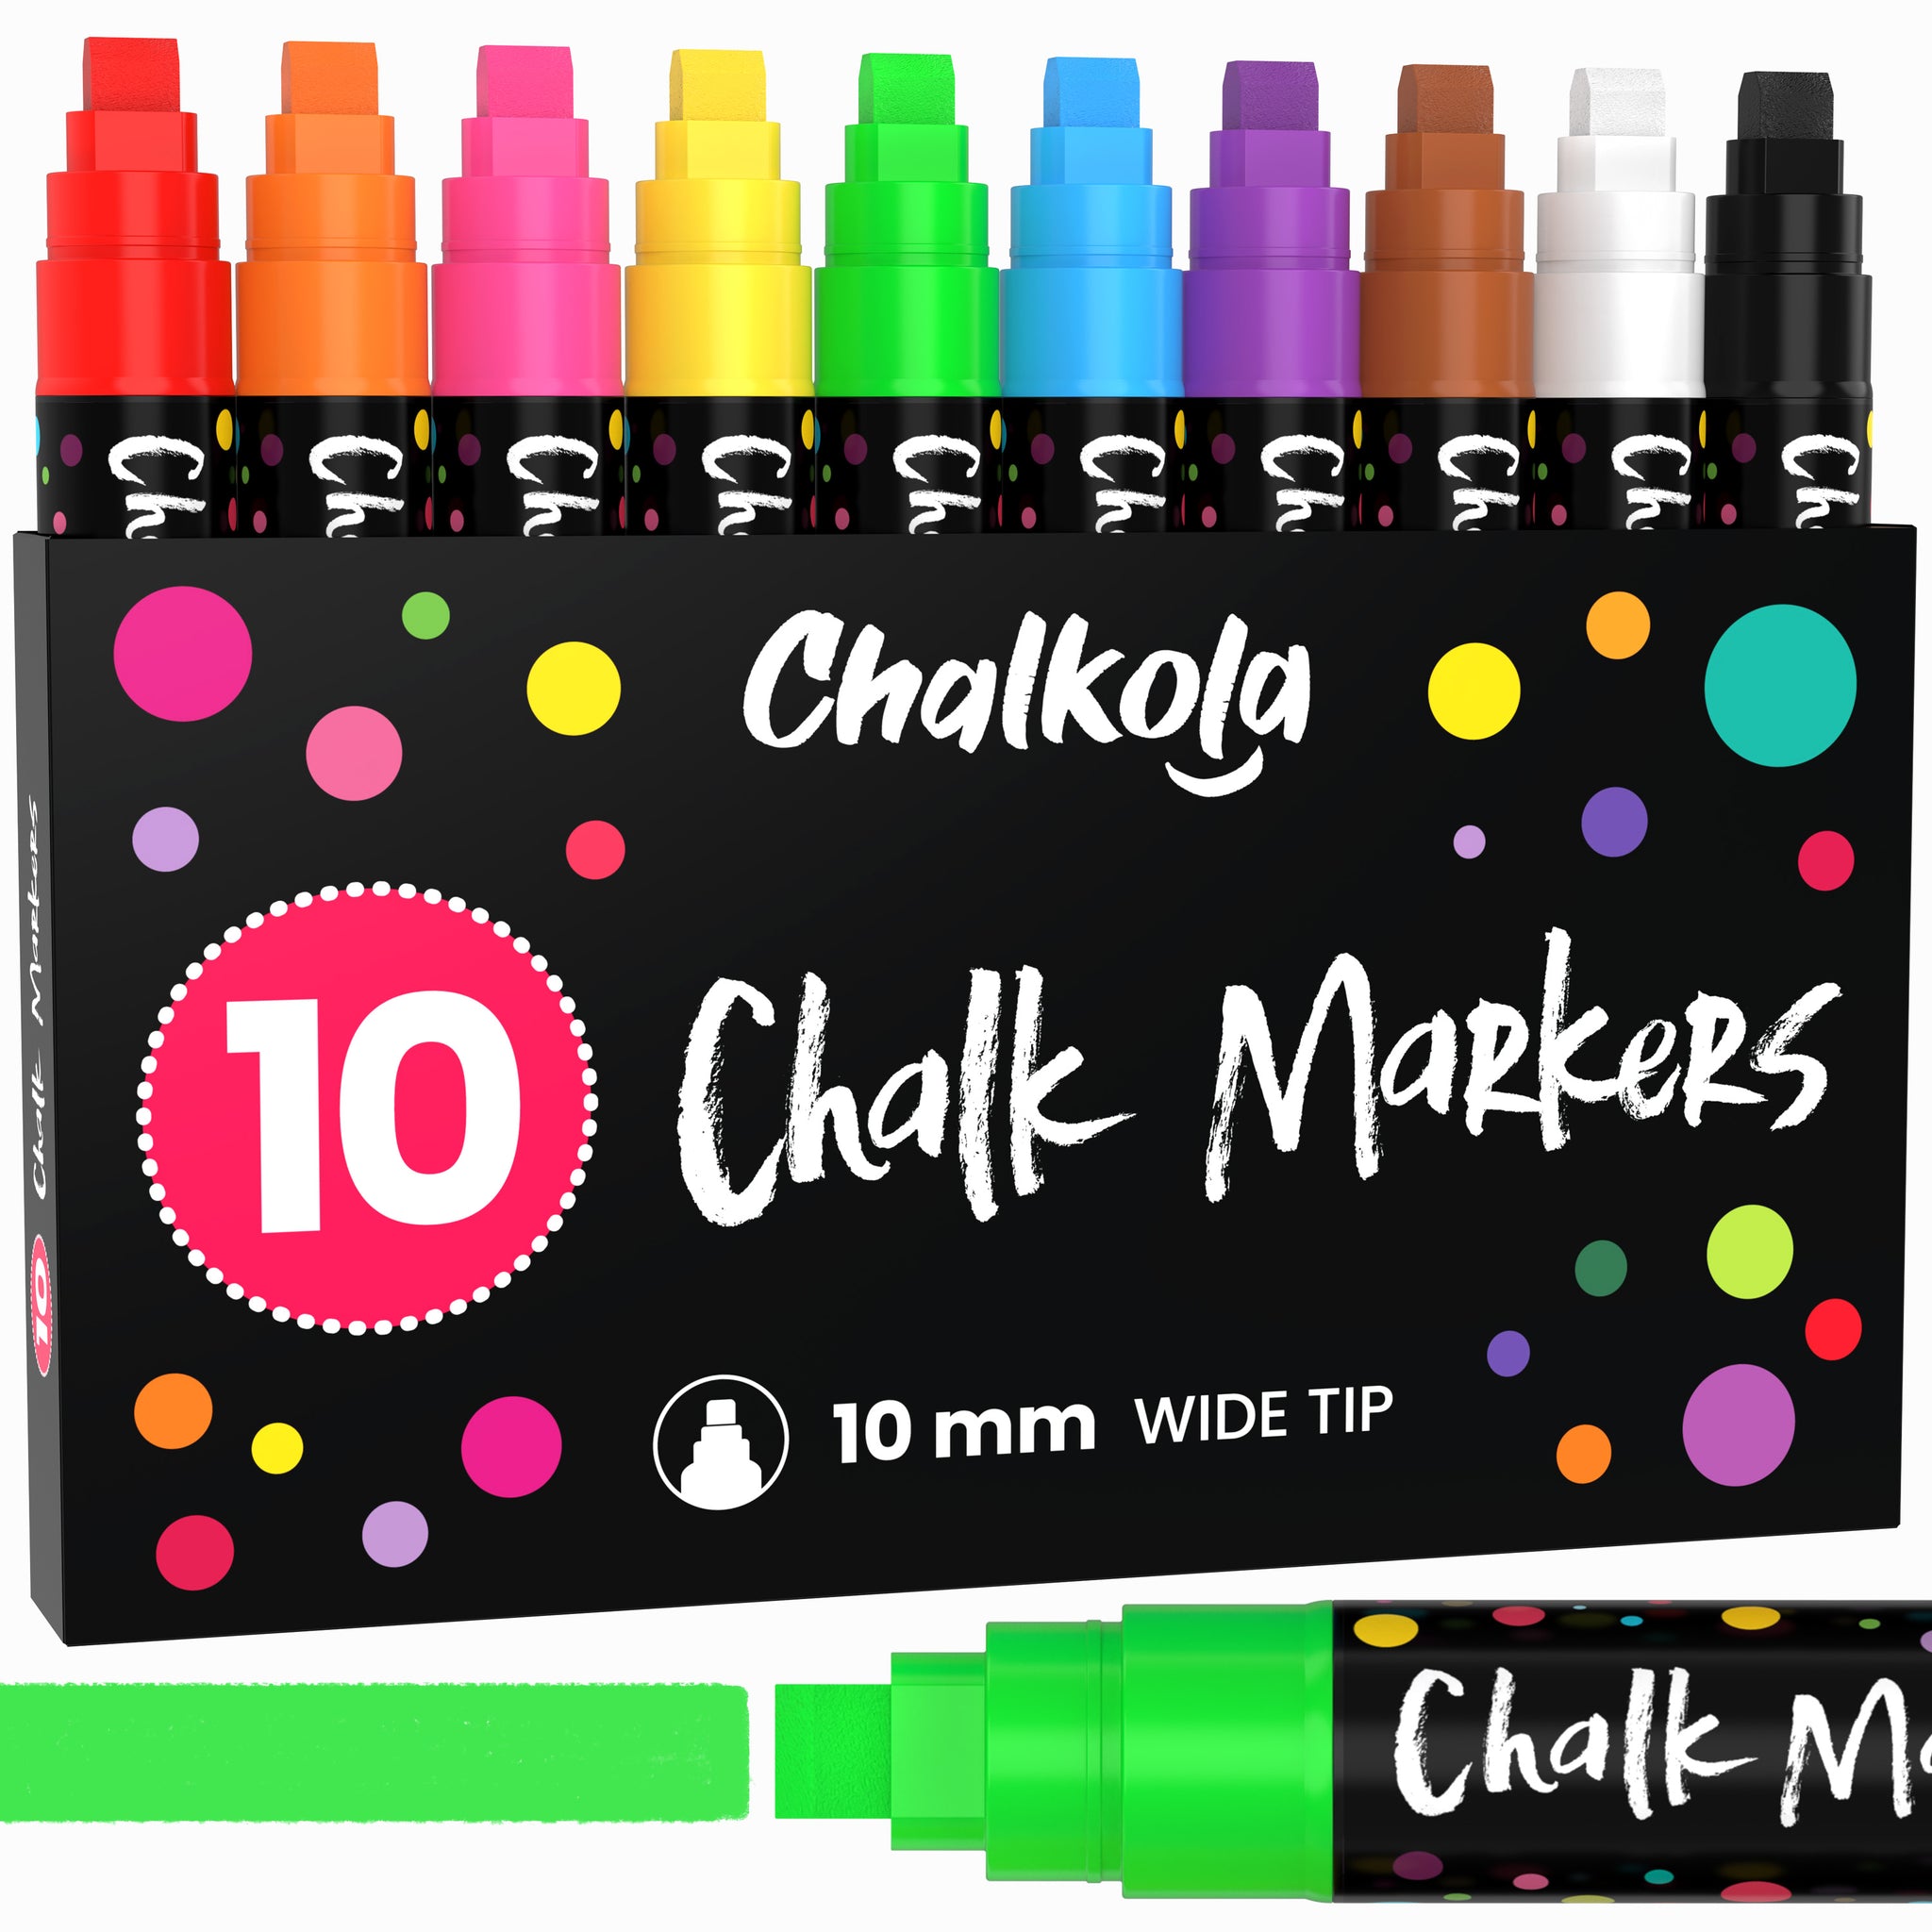 Natural Chalkboard Cleaner & Whiteboard Spray - Chalkola Art Supply